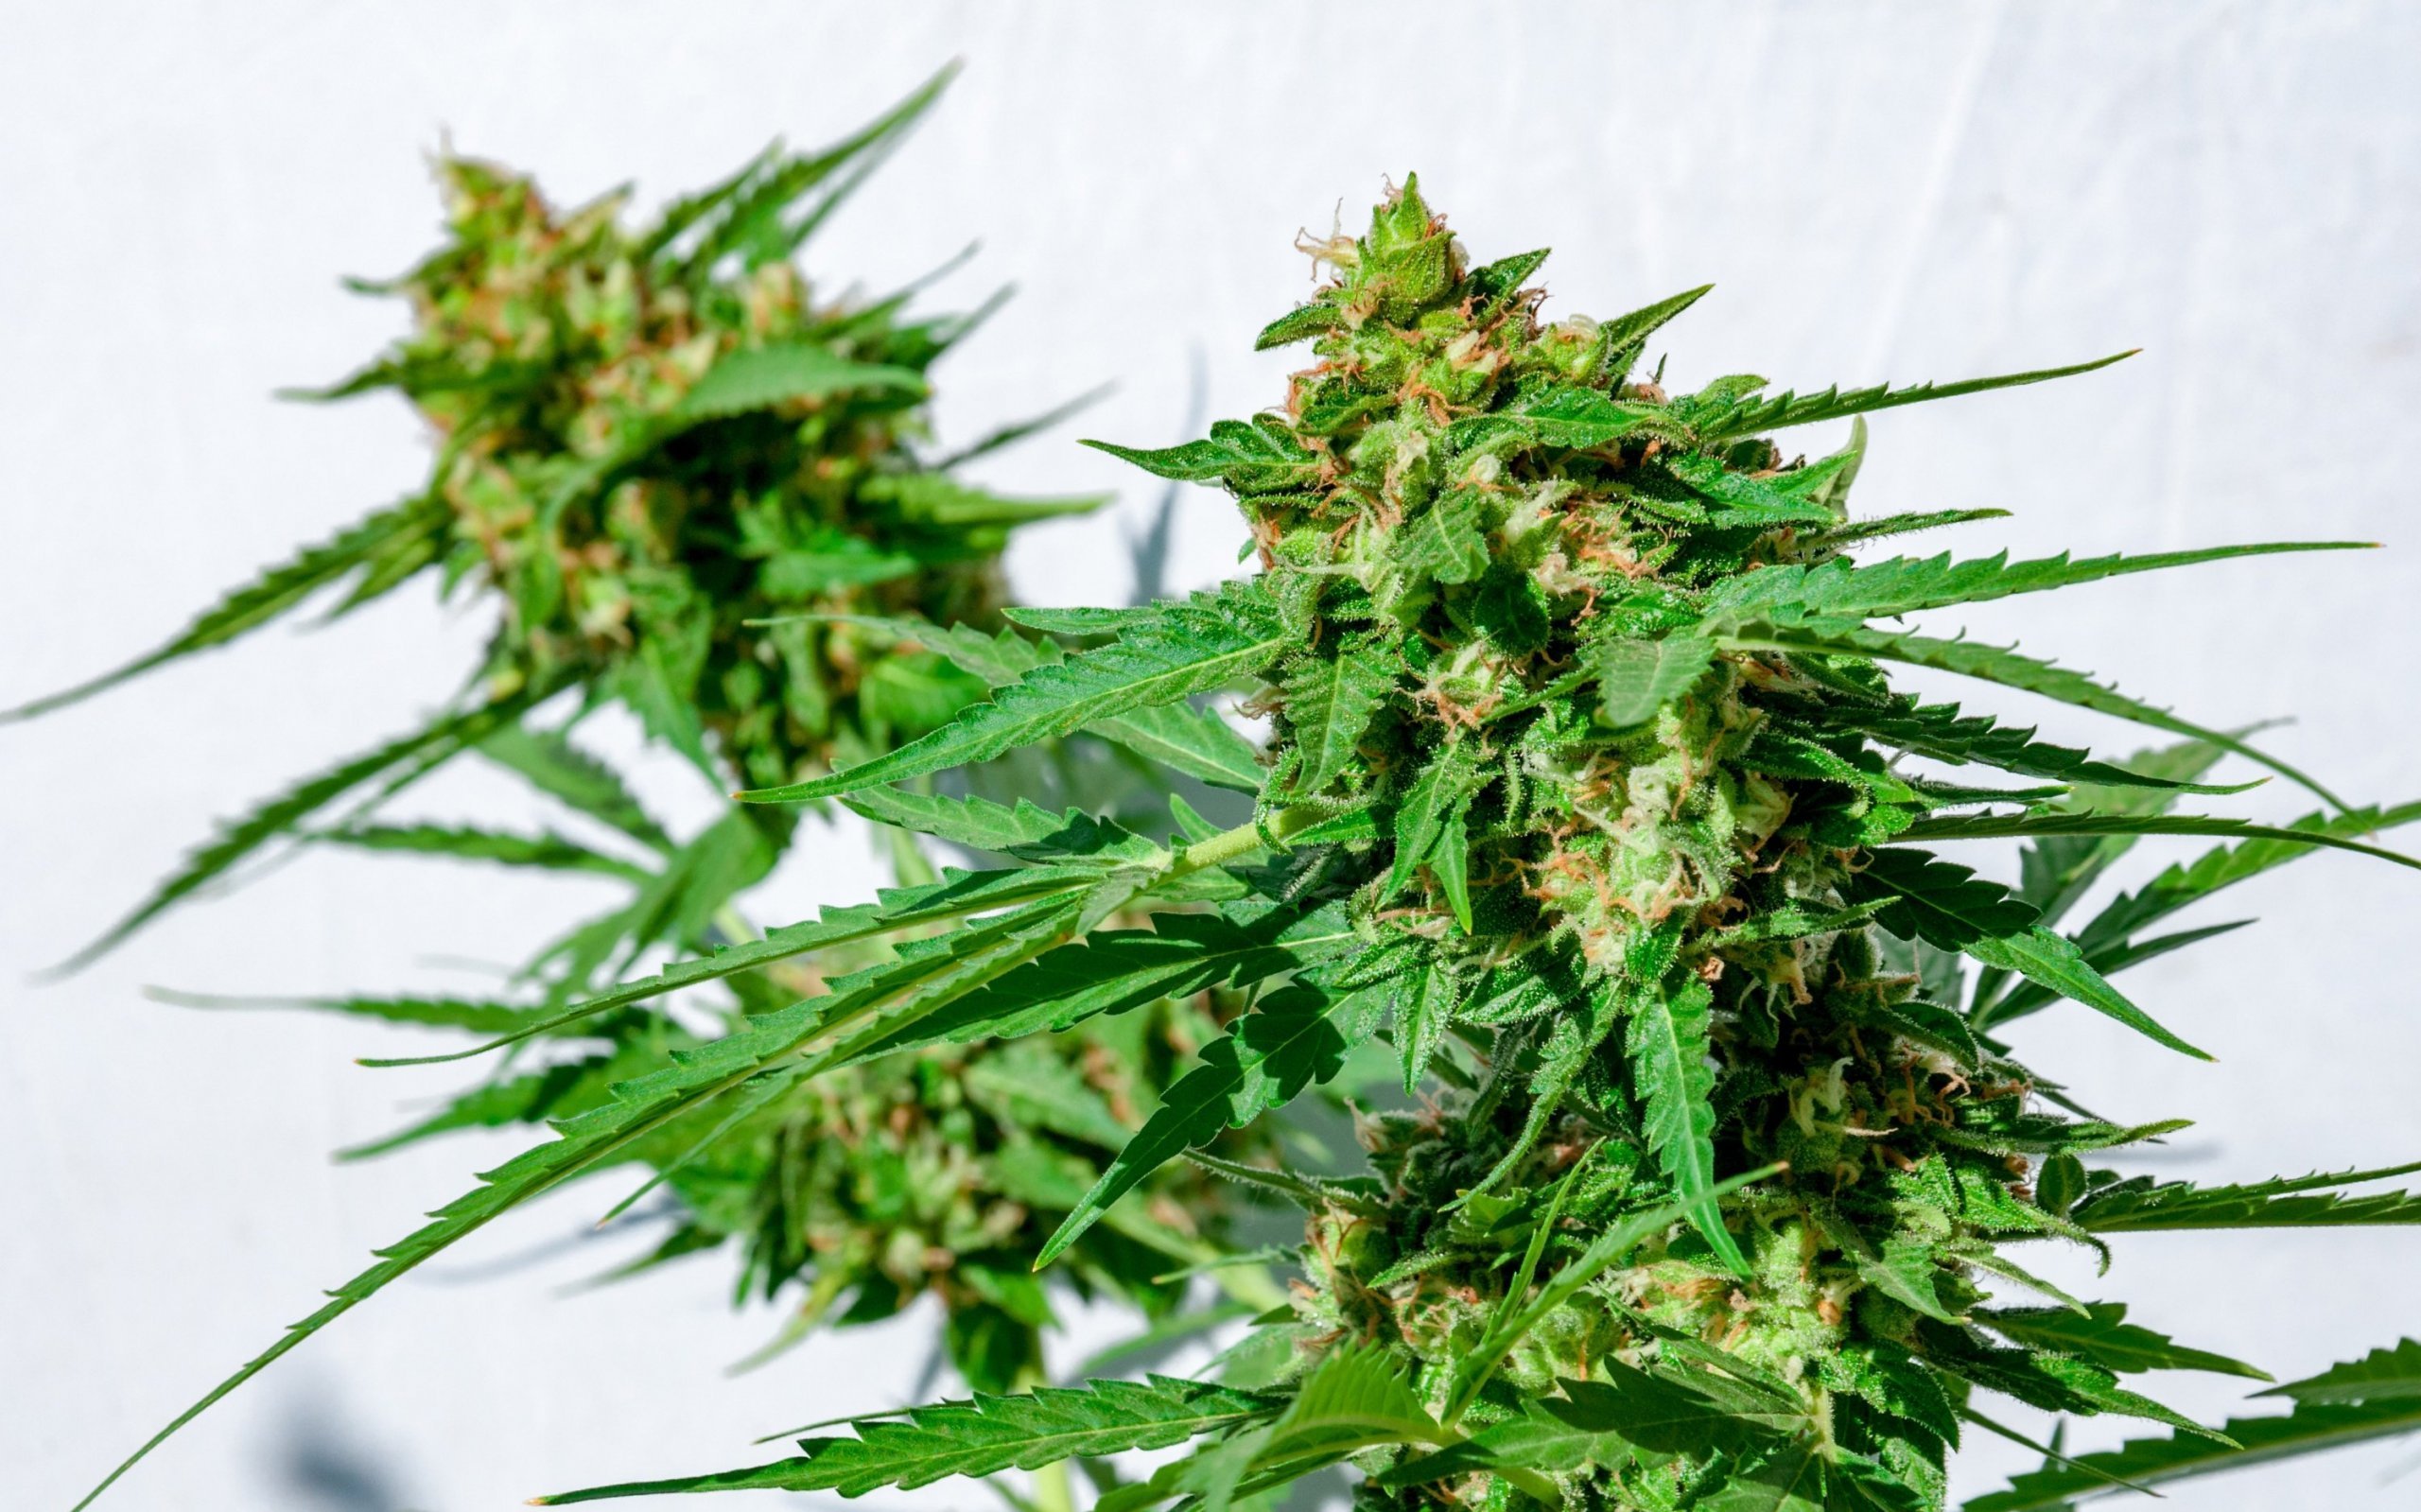 The ripening process of marijuana buds